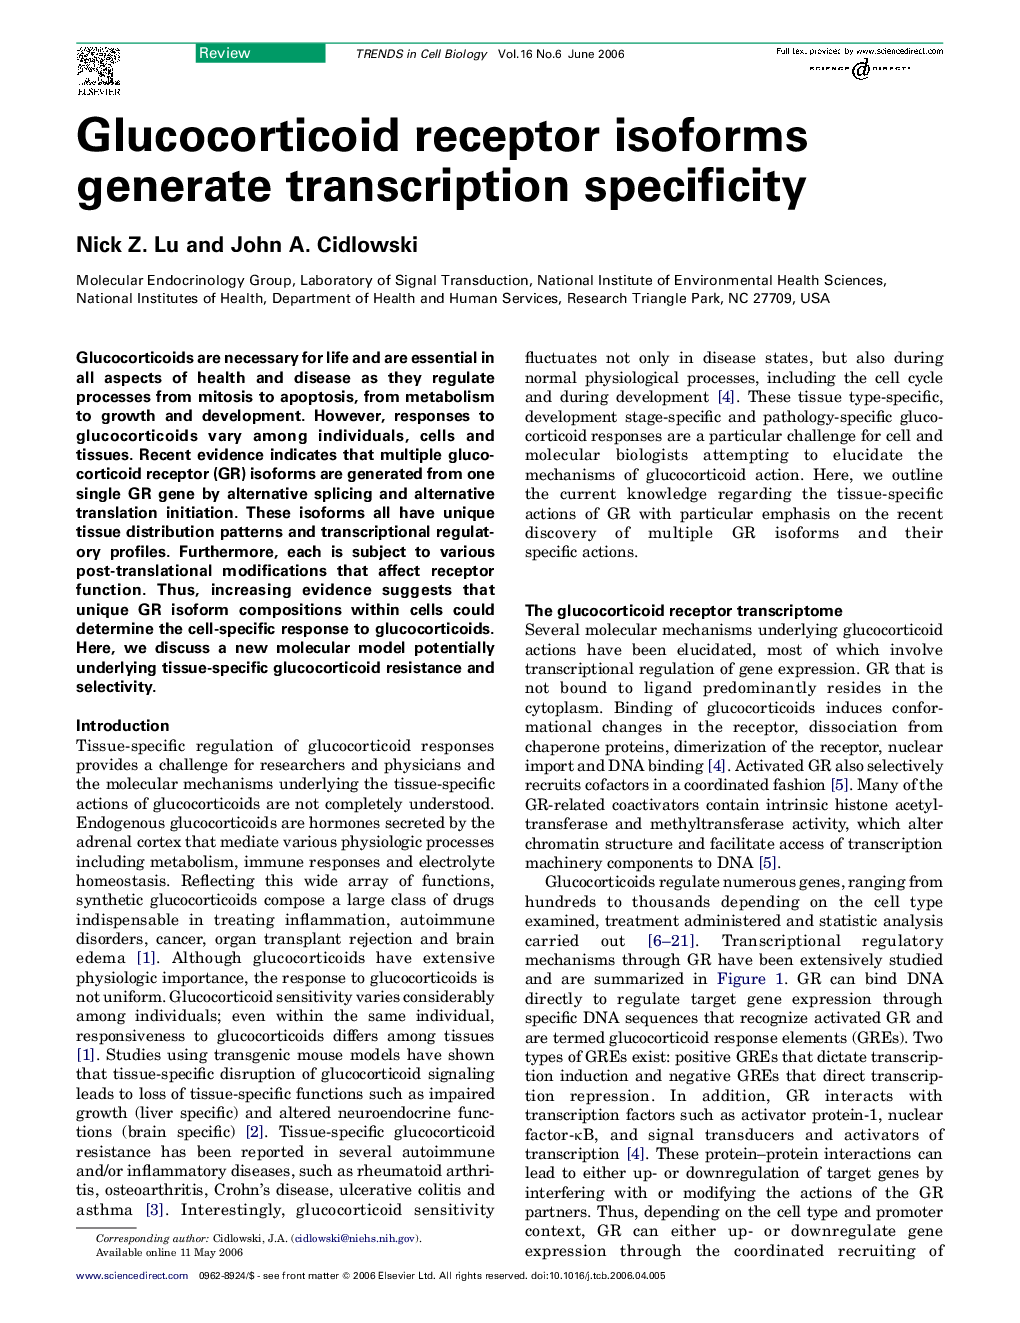 Glucocorticoid receptor isoforms generate transcription specificity